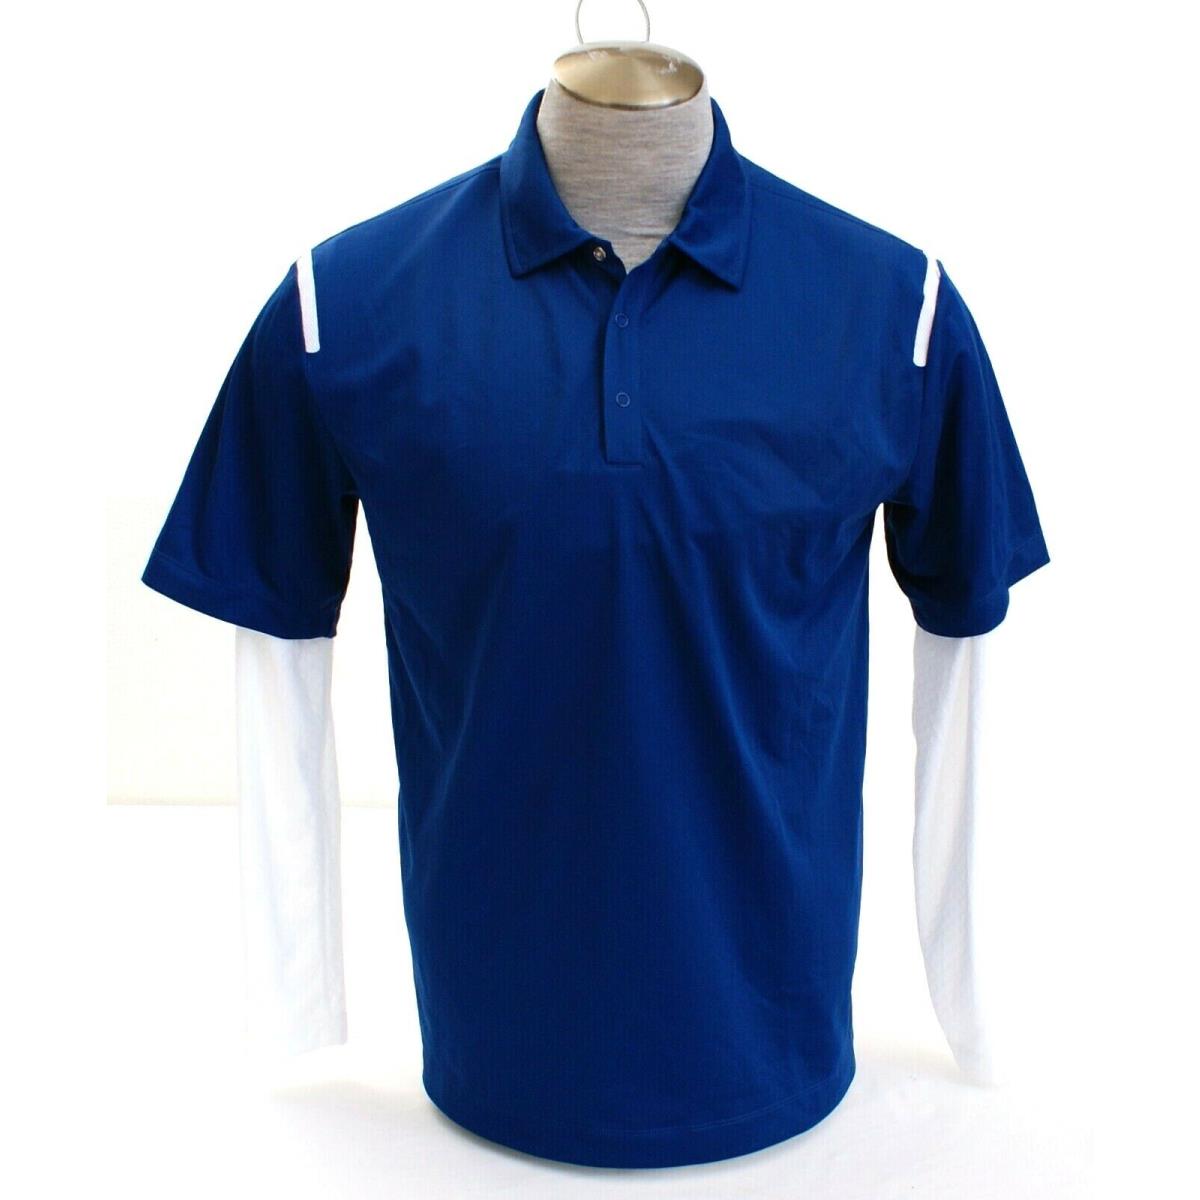 Nike Golf Dri Fit Blue White Long Sleeve Double Layer Shirt Polo Shirt Men`s